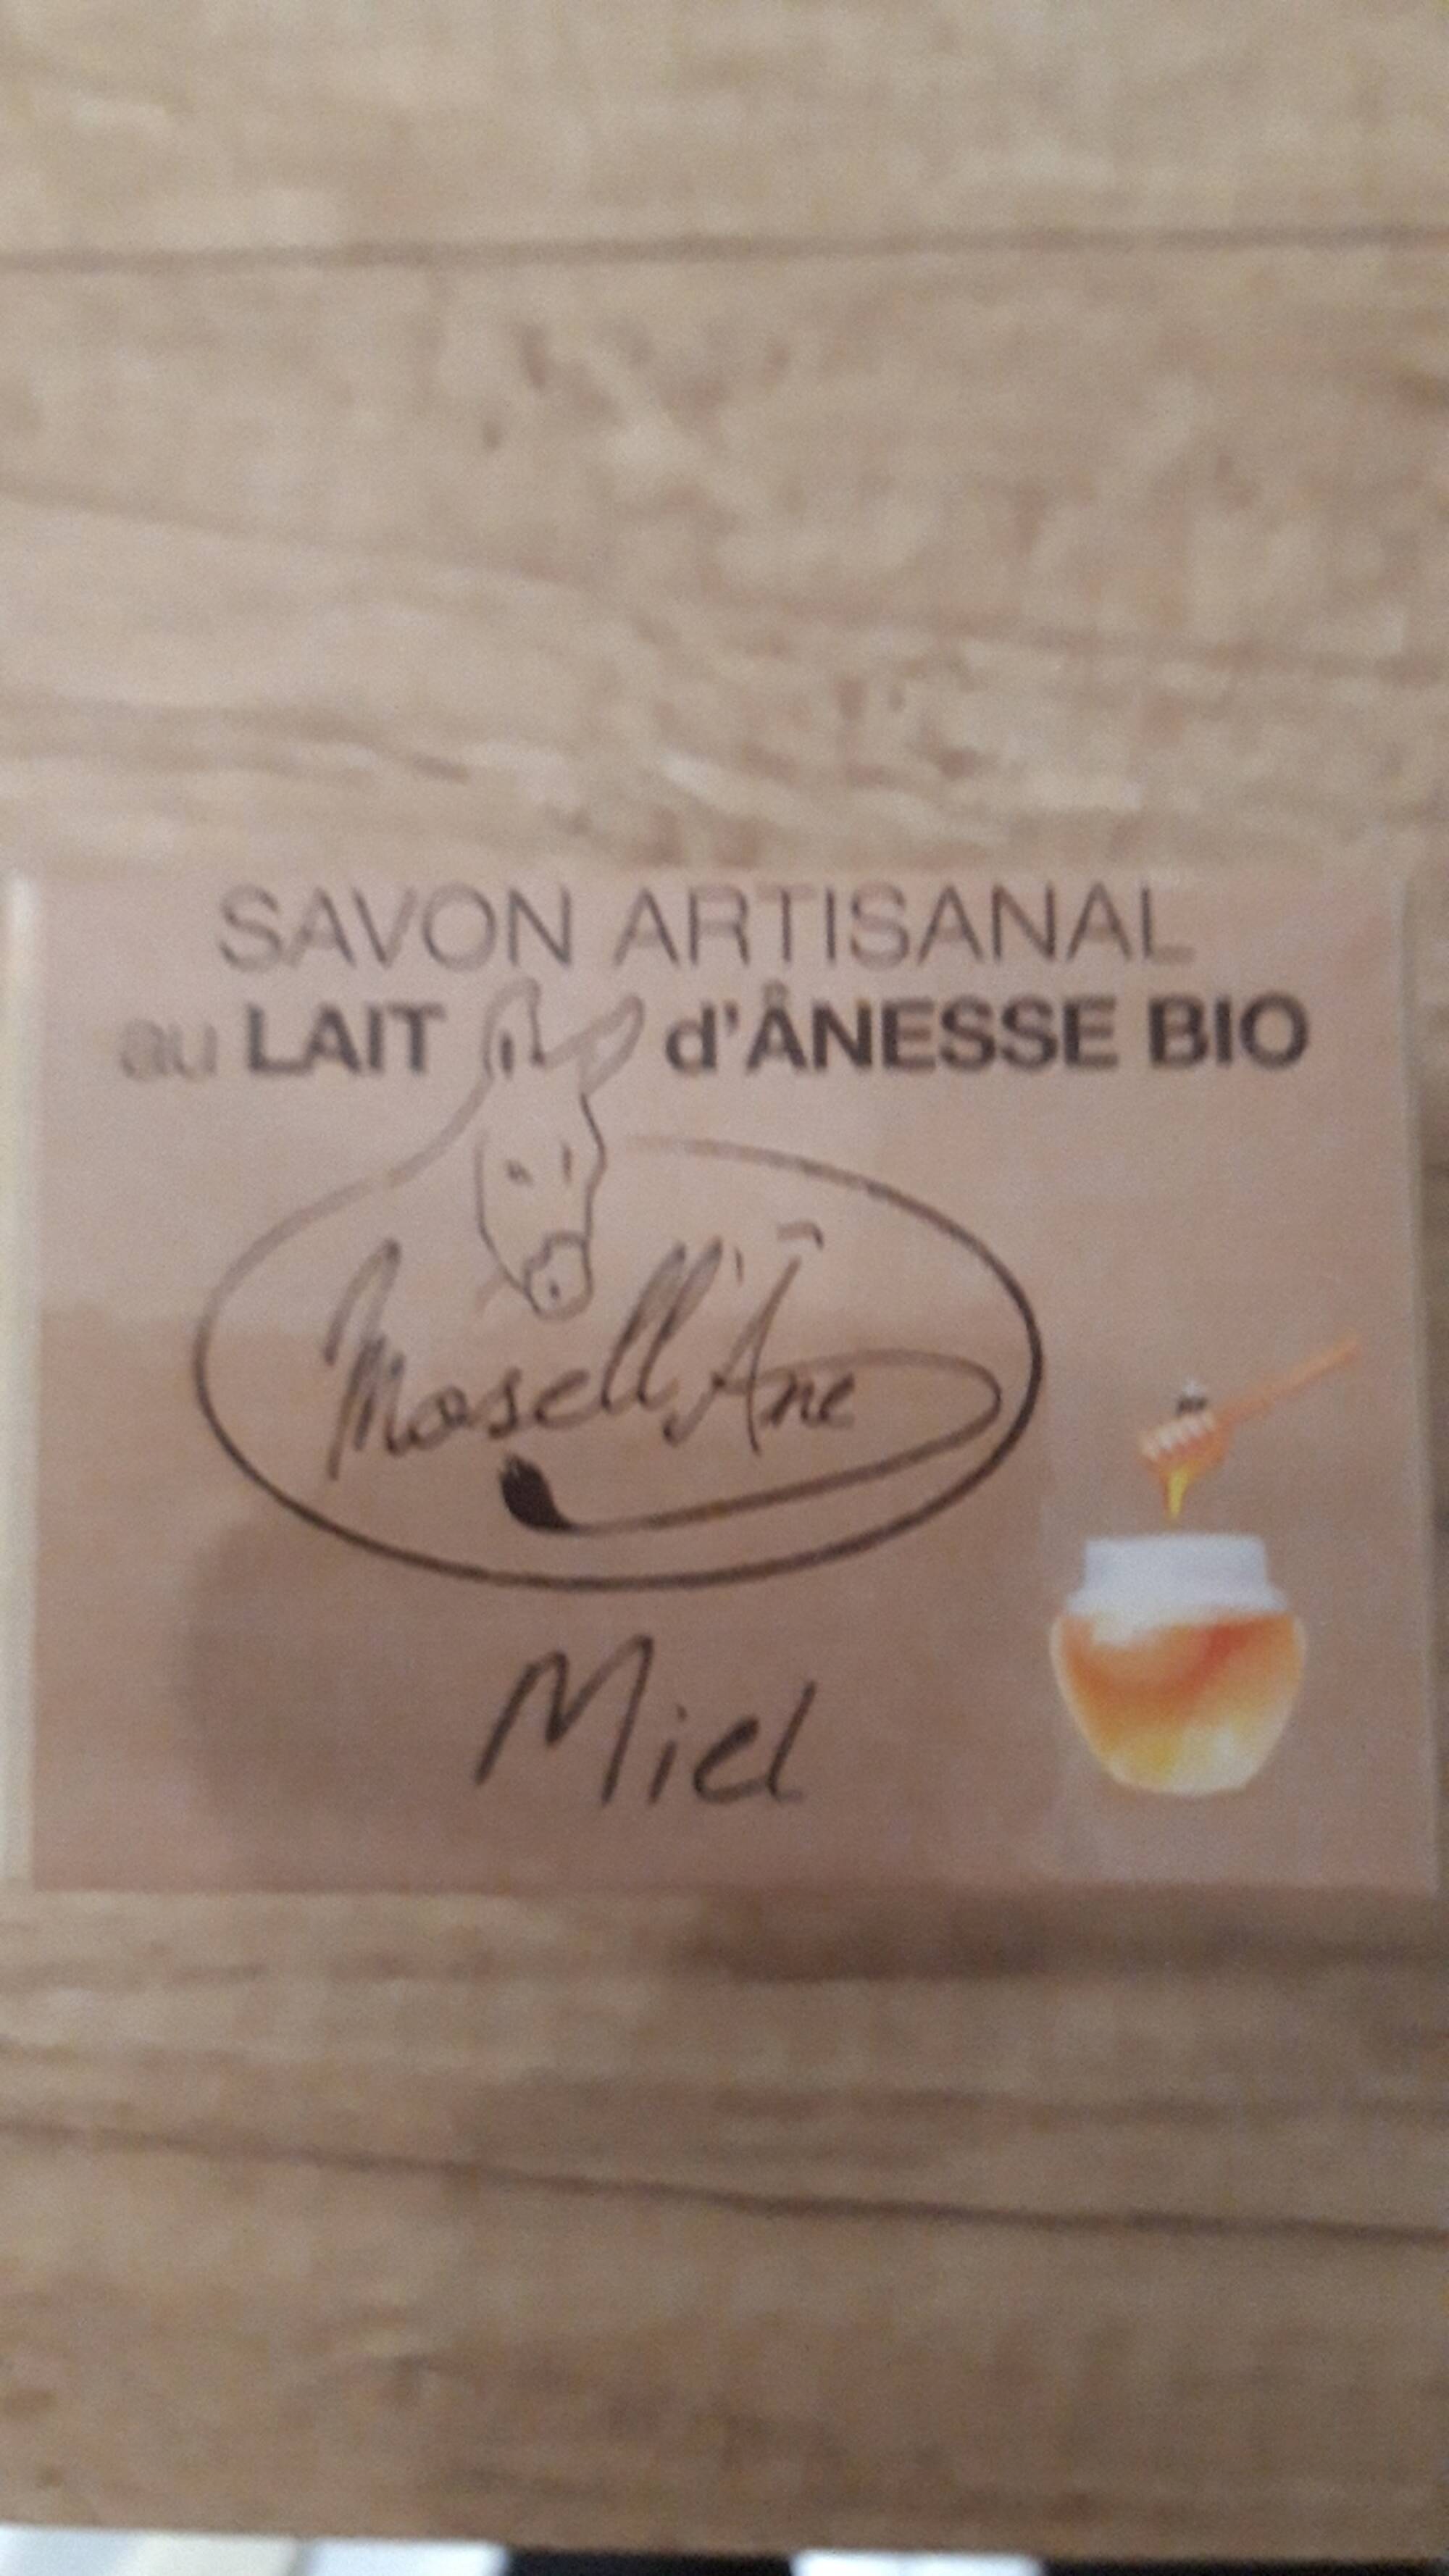 MOSELL'ÂNE - Miel - Savon artisanal au lait d'ânesse bio